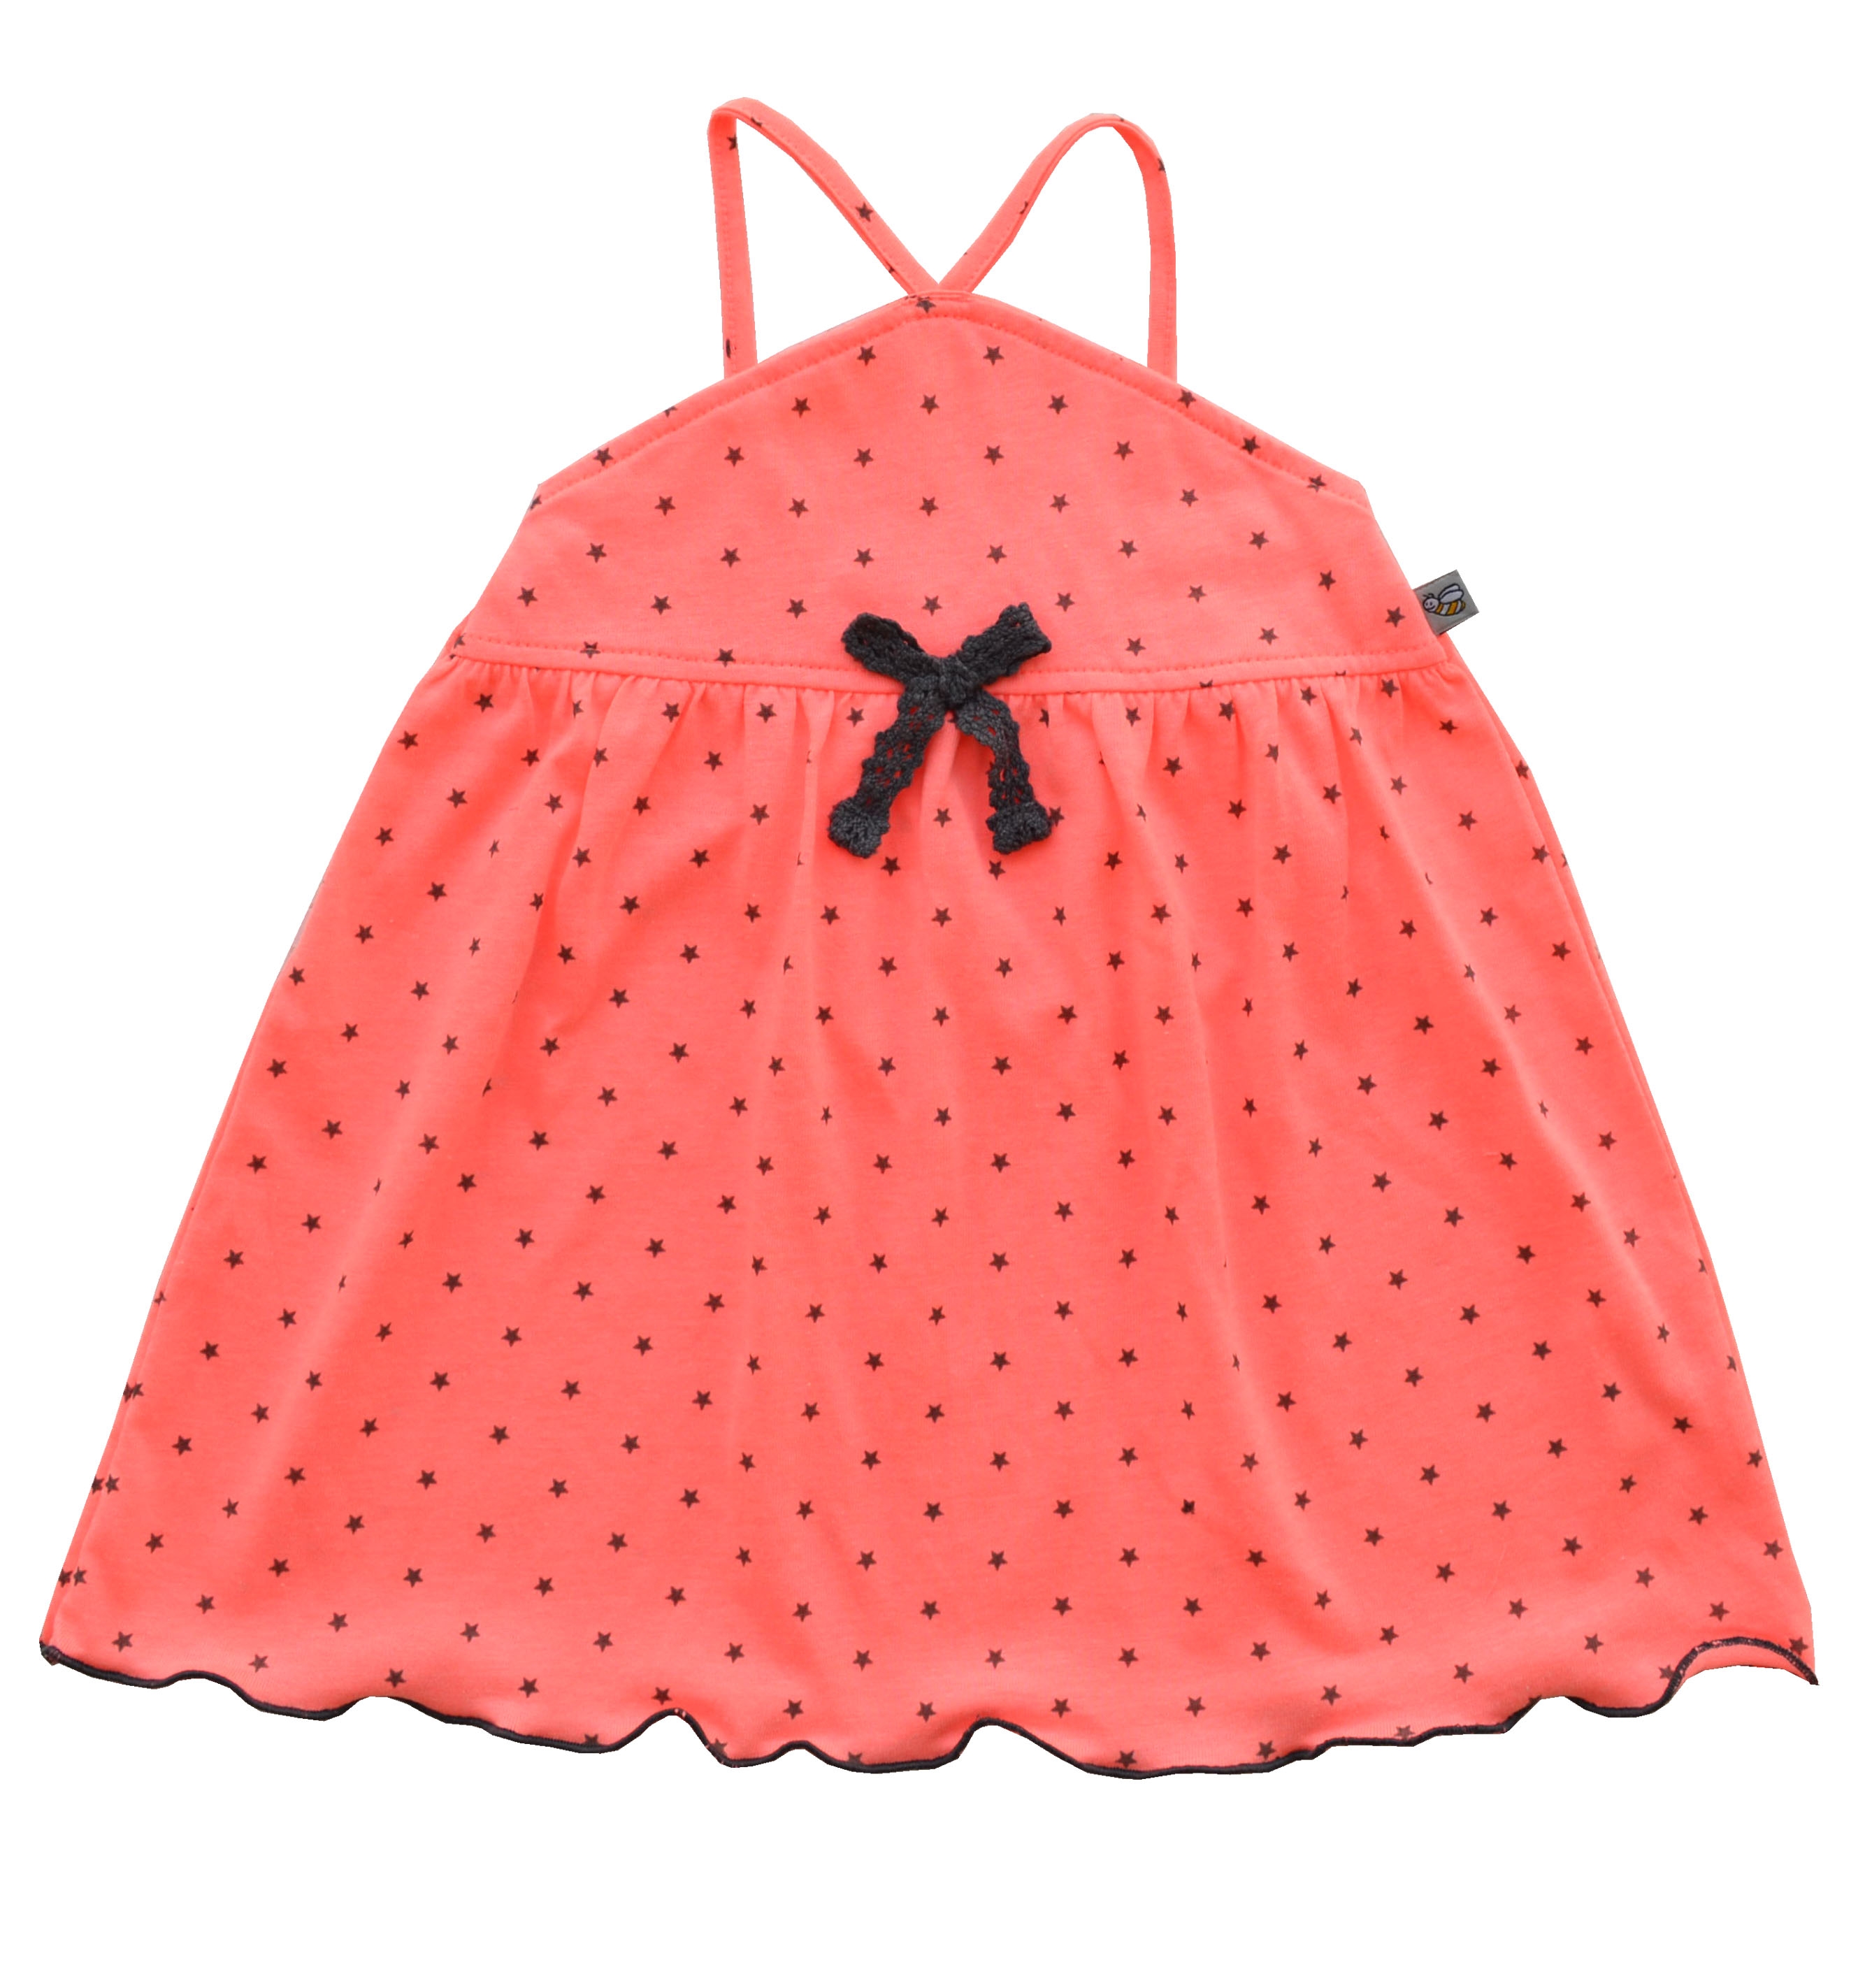 Allover Star Print on Orange Sleeveless Dress (100% Cotton Jersey)